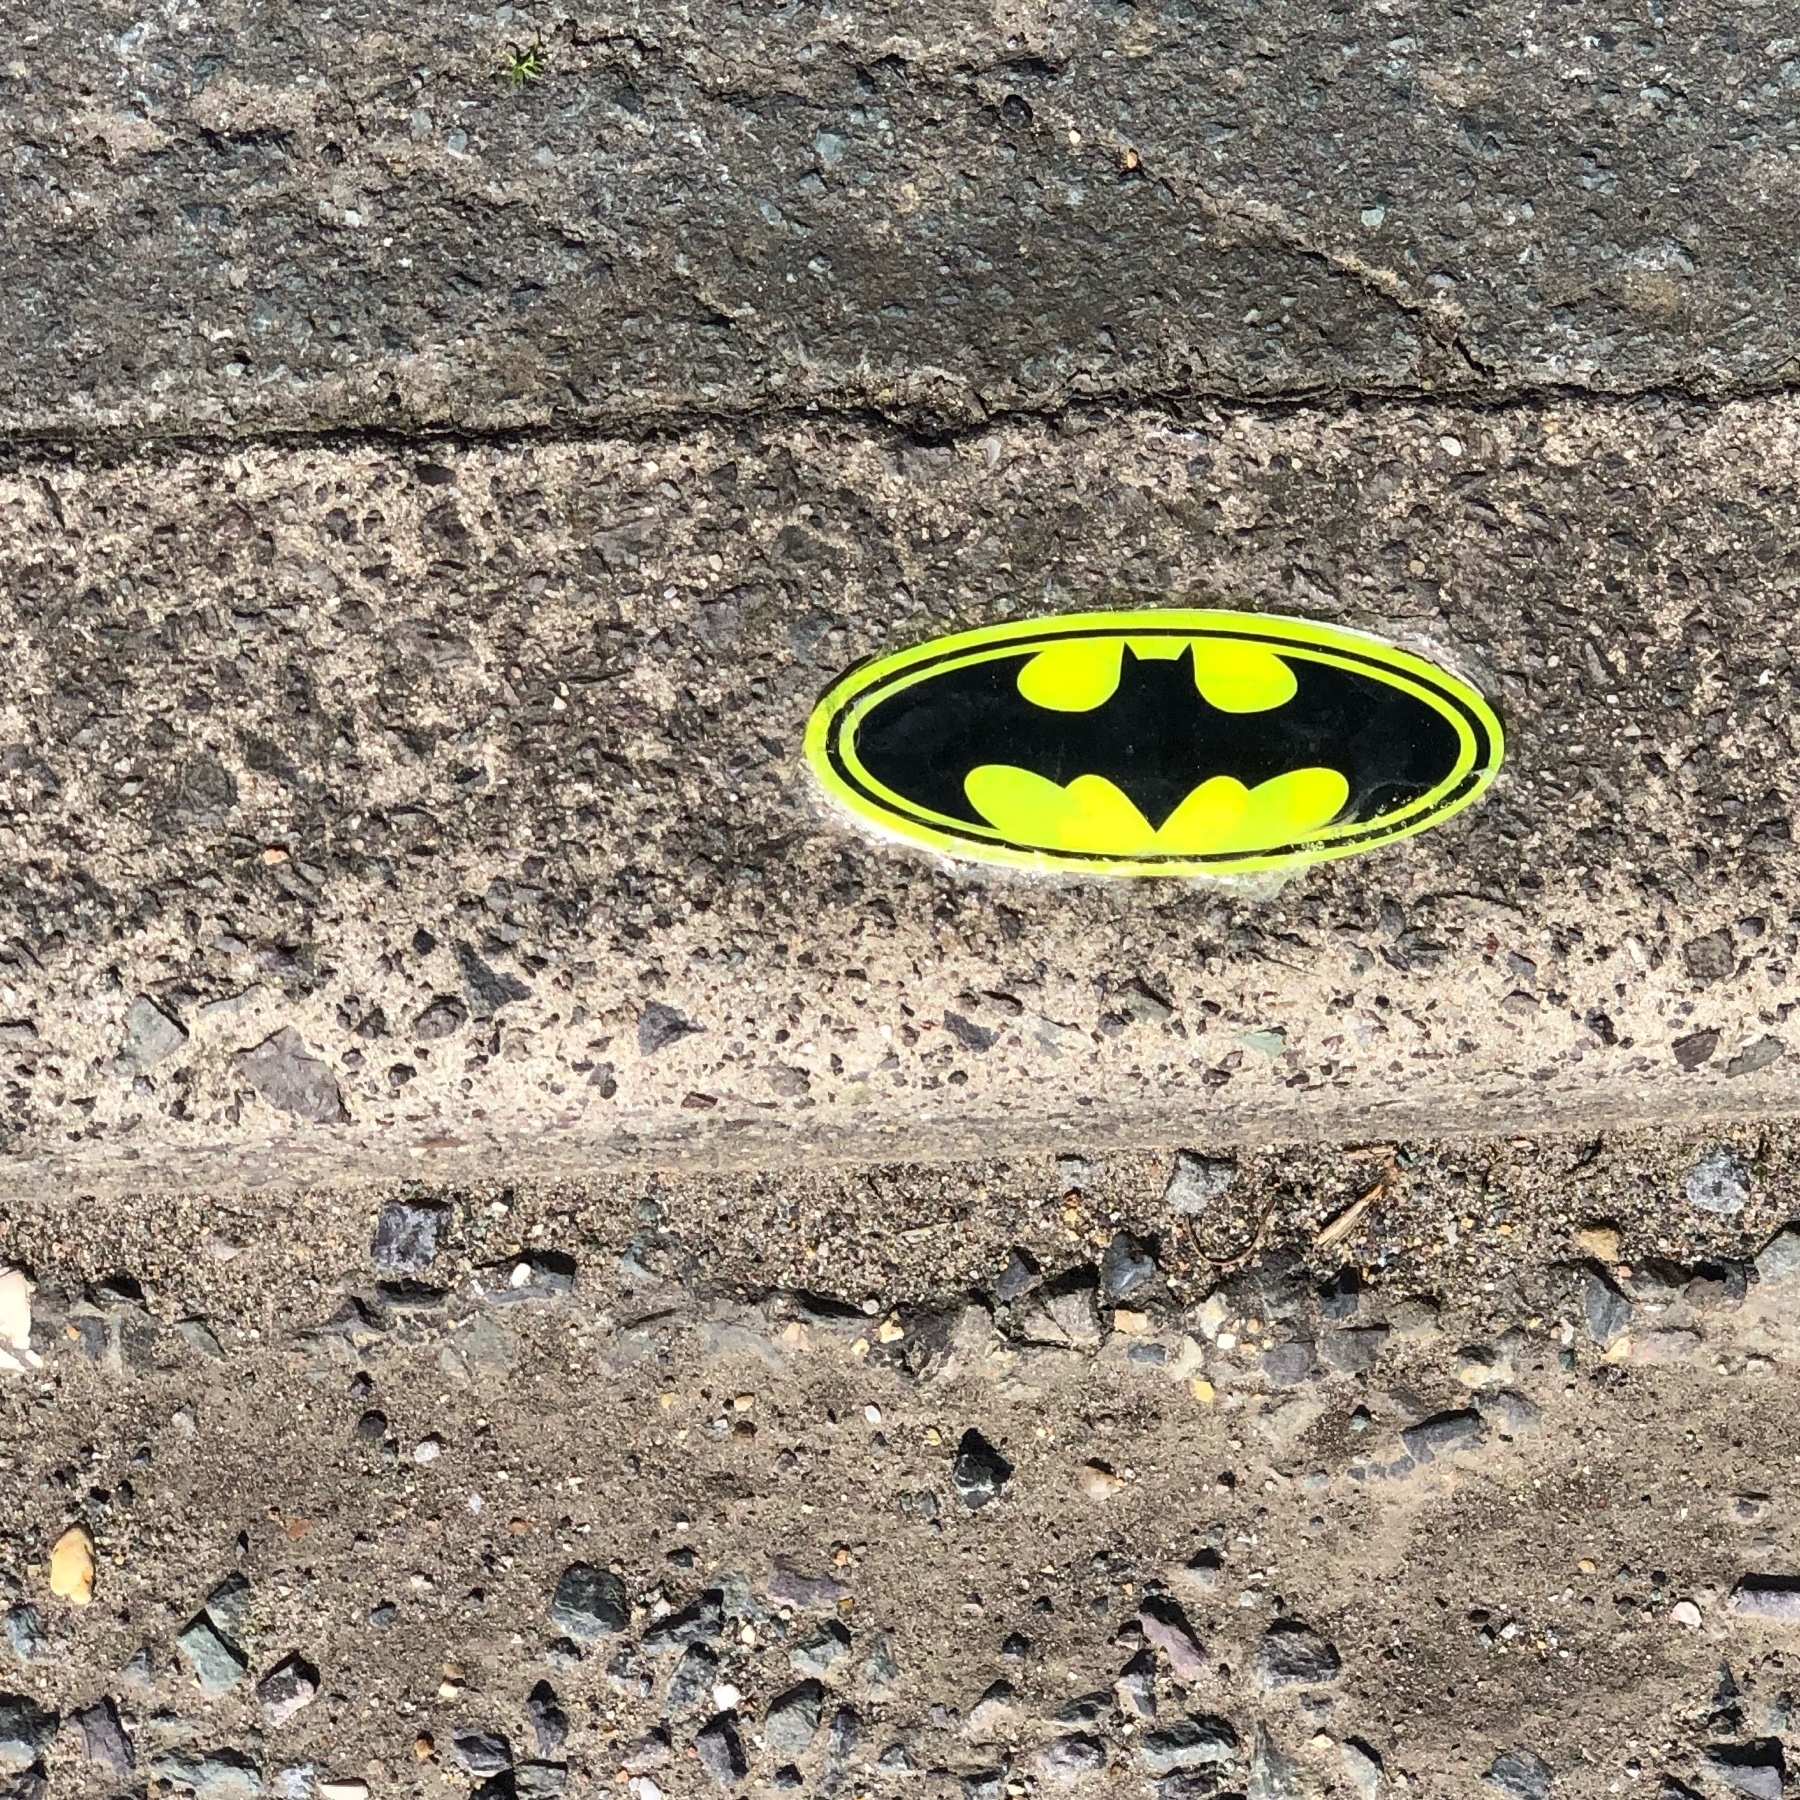 A batman logo sticker on a kerb. 